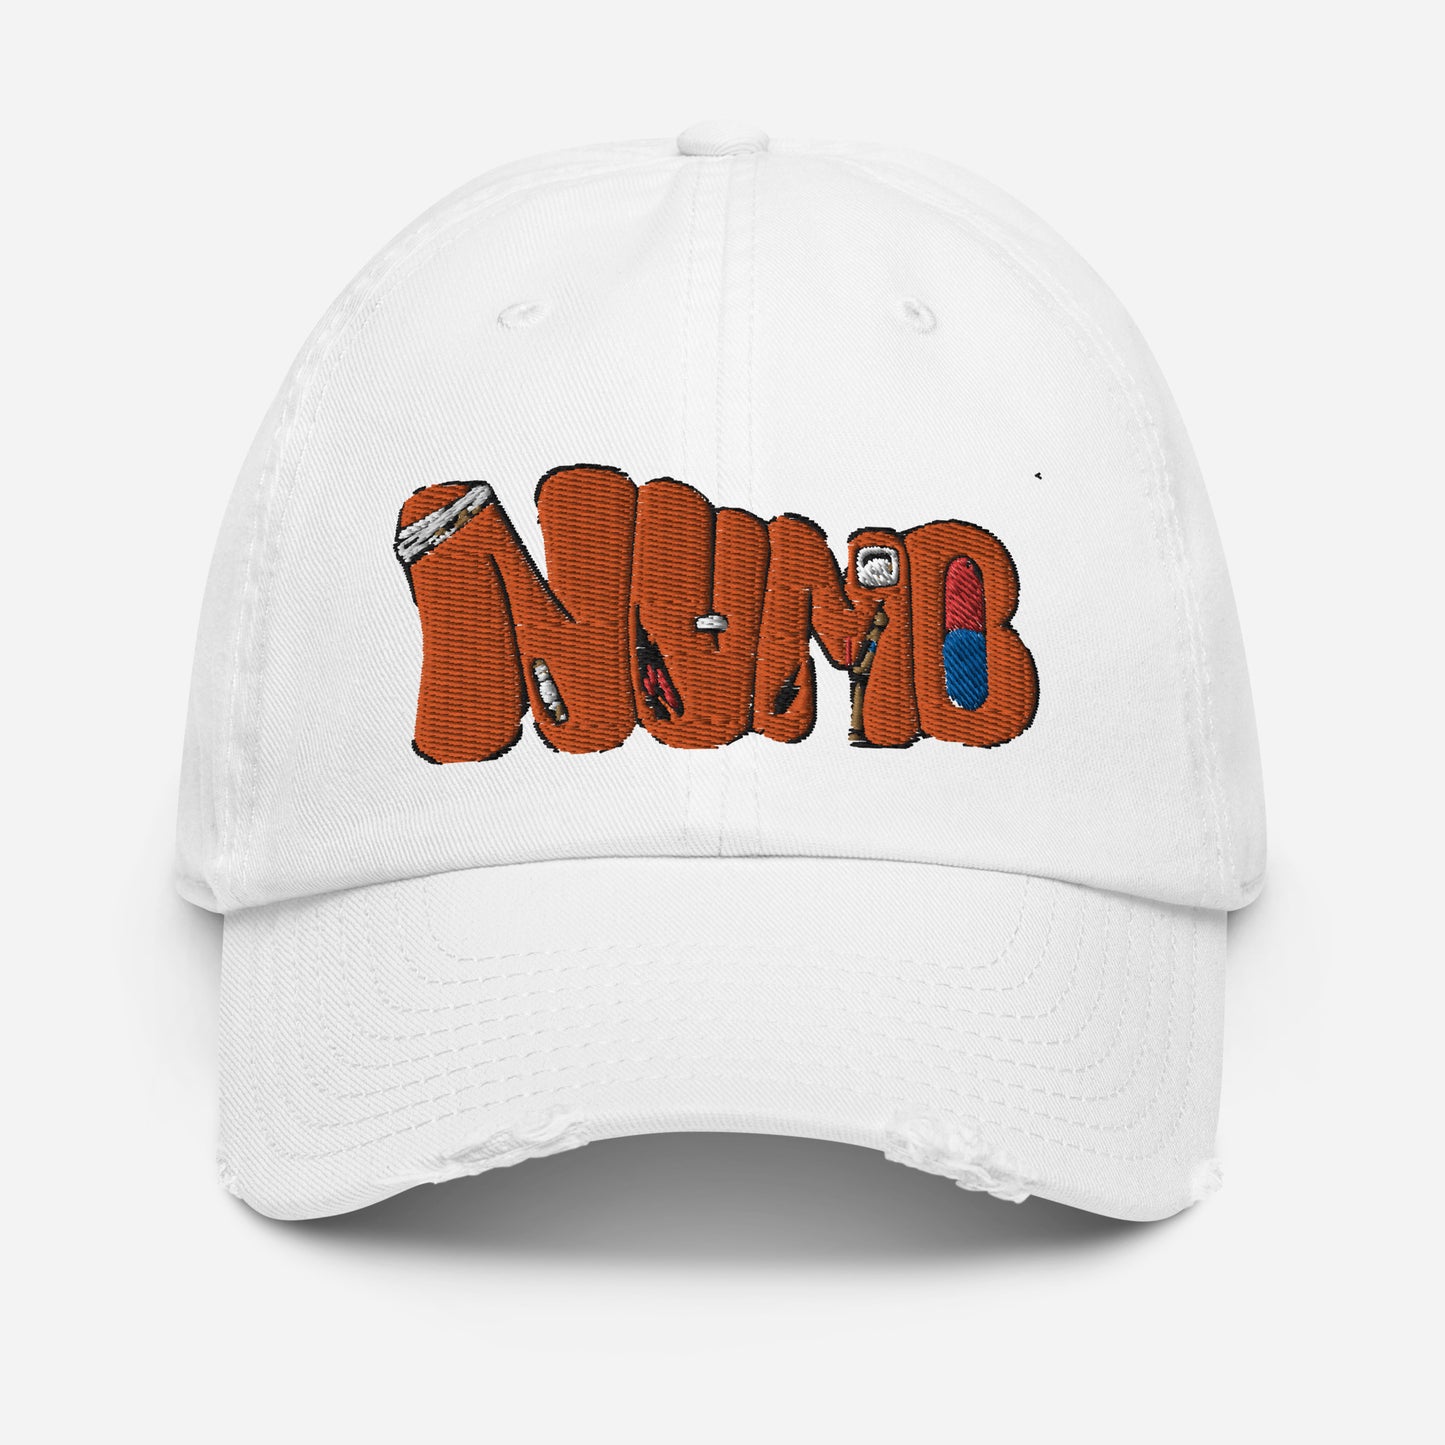 NUMB Distressed Baseball Cap